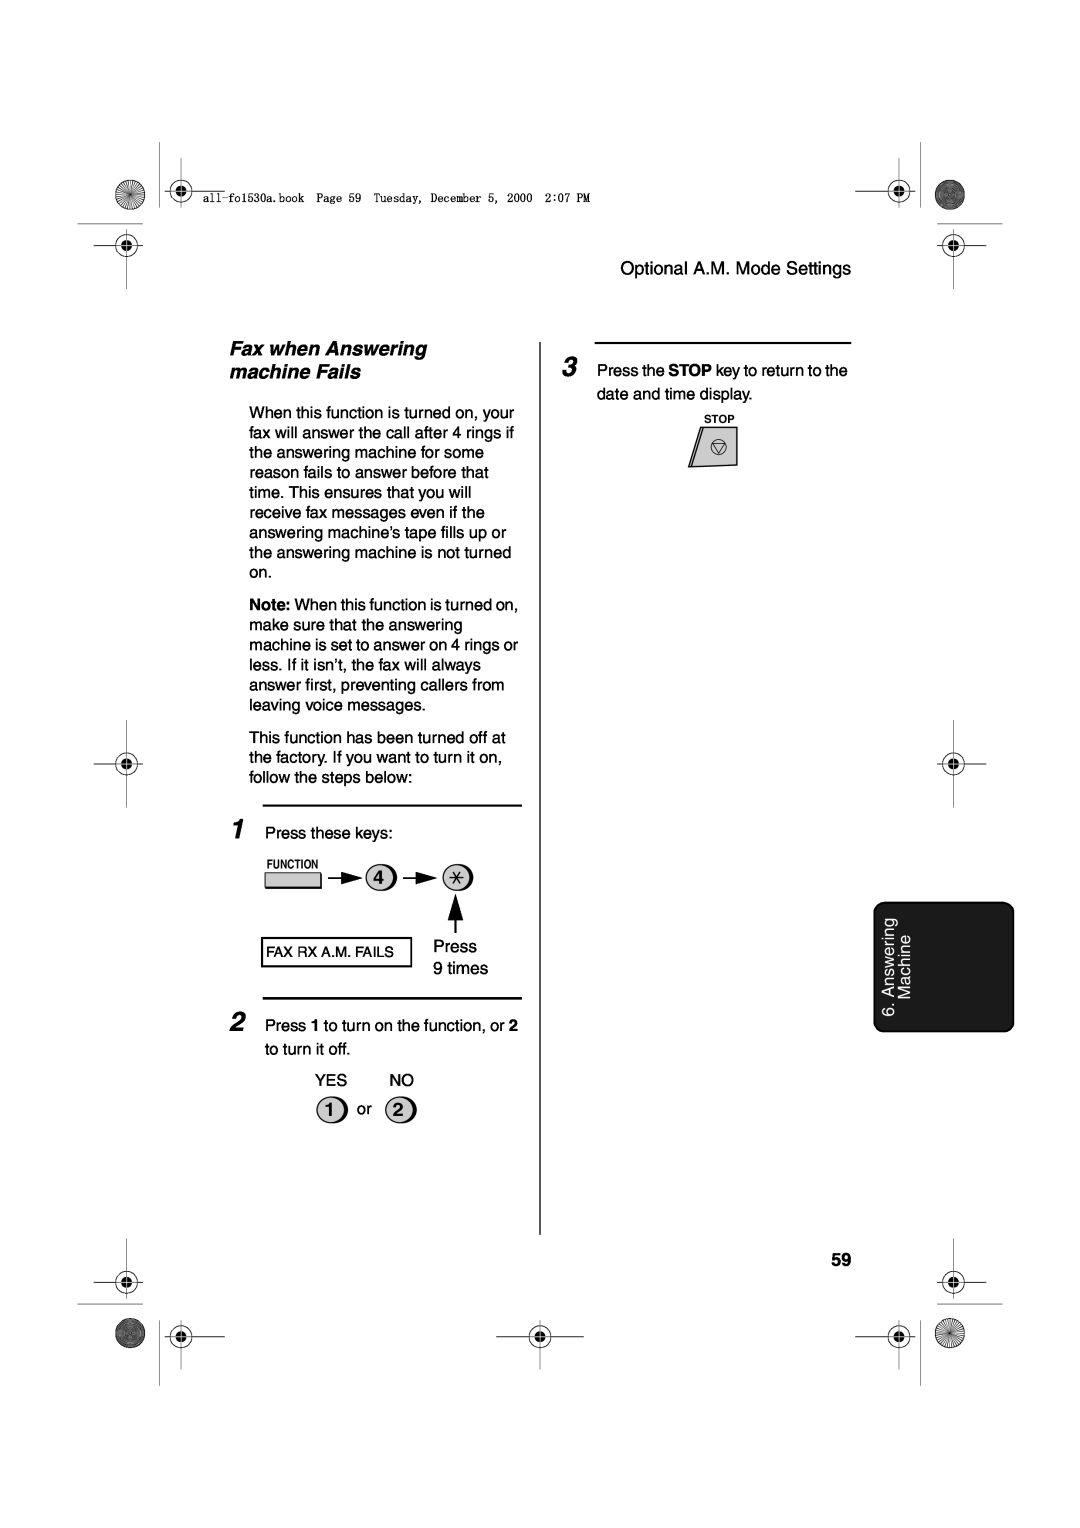 Sharp FO-1530 operation manual Fax when Answering machine Fails, Machine, 1 or 